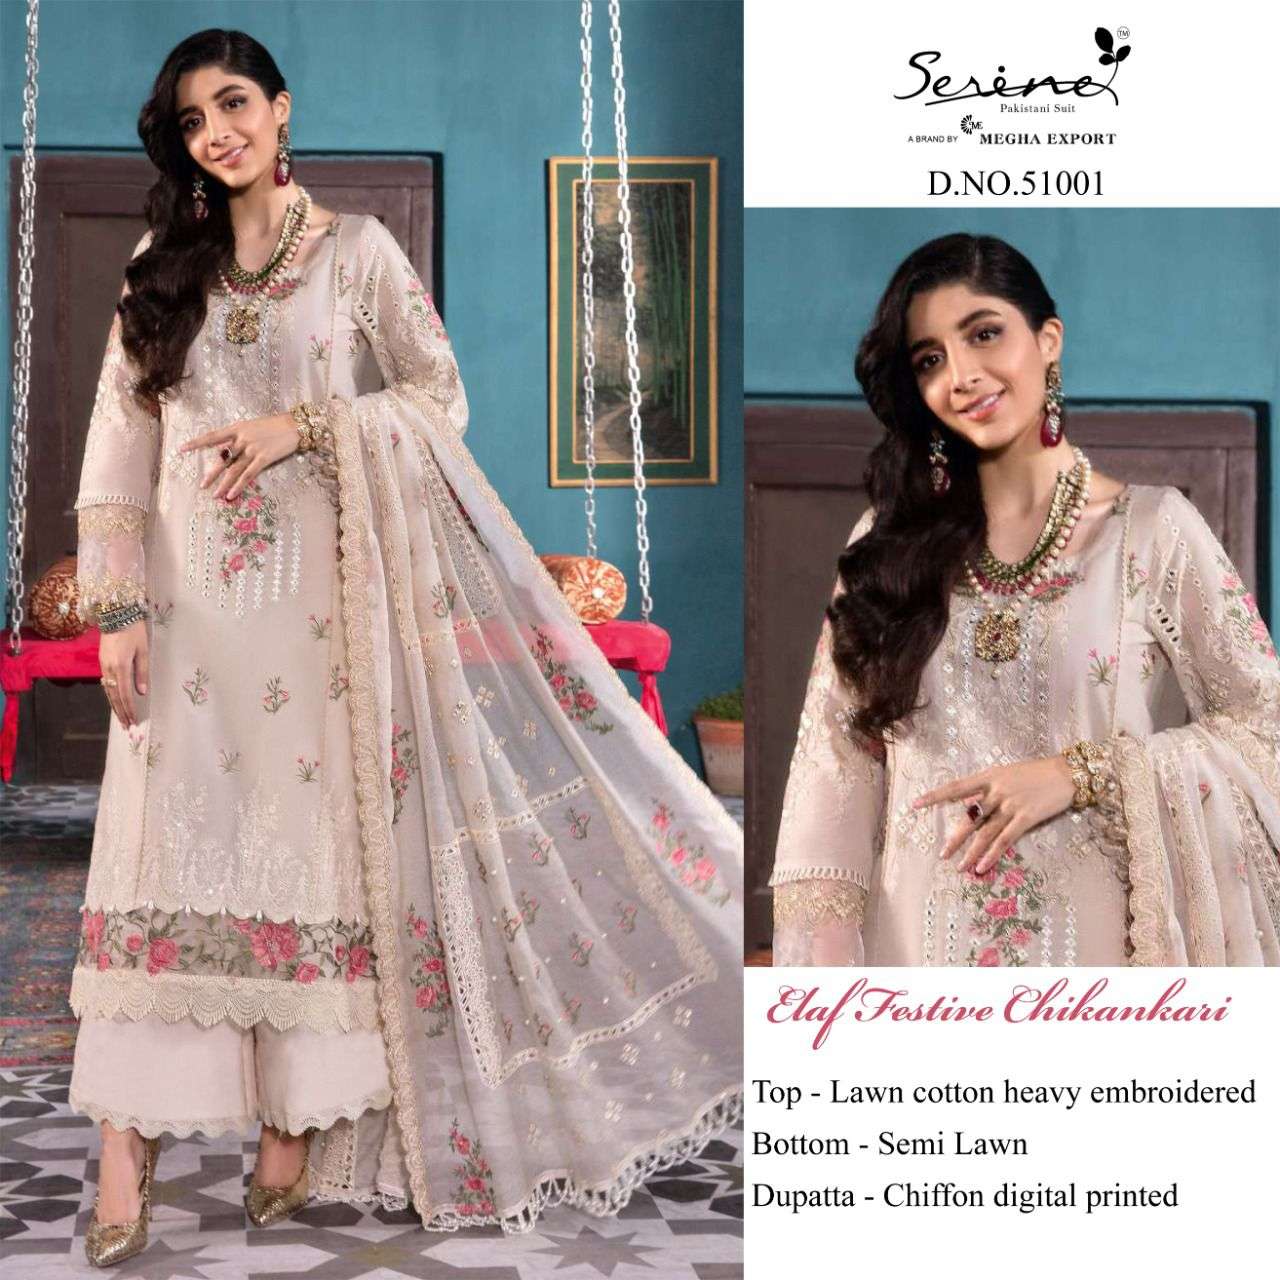 Megha Export Elaf Festive Chikankari Pakistani Cotton Dress Catalog Supplier